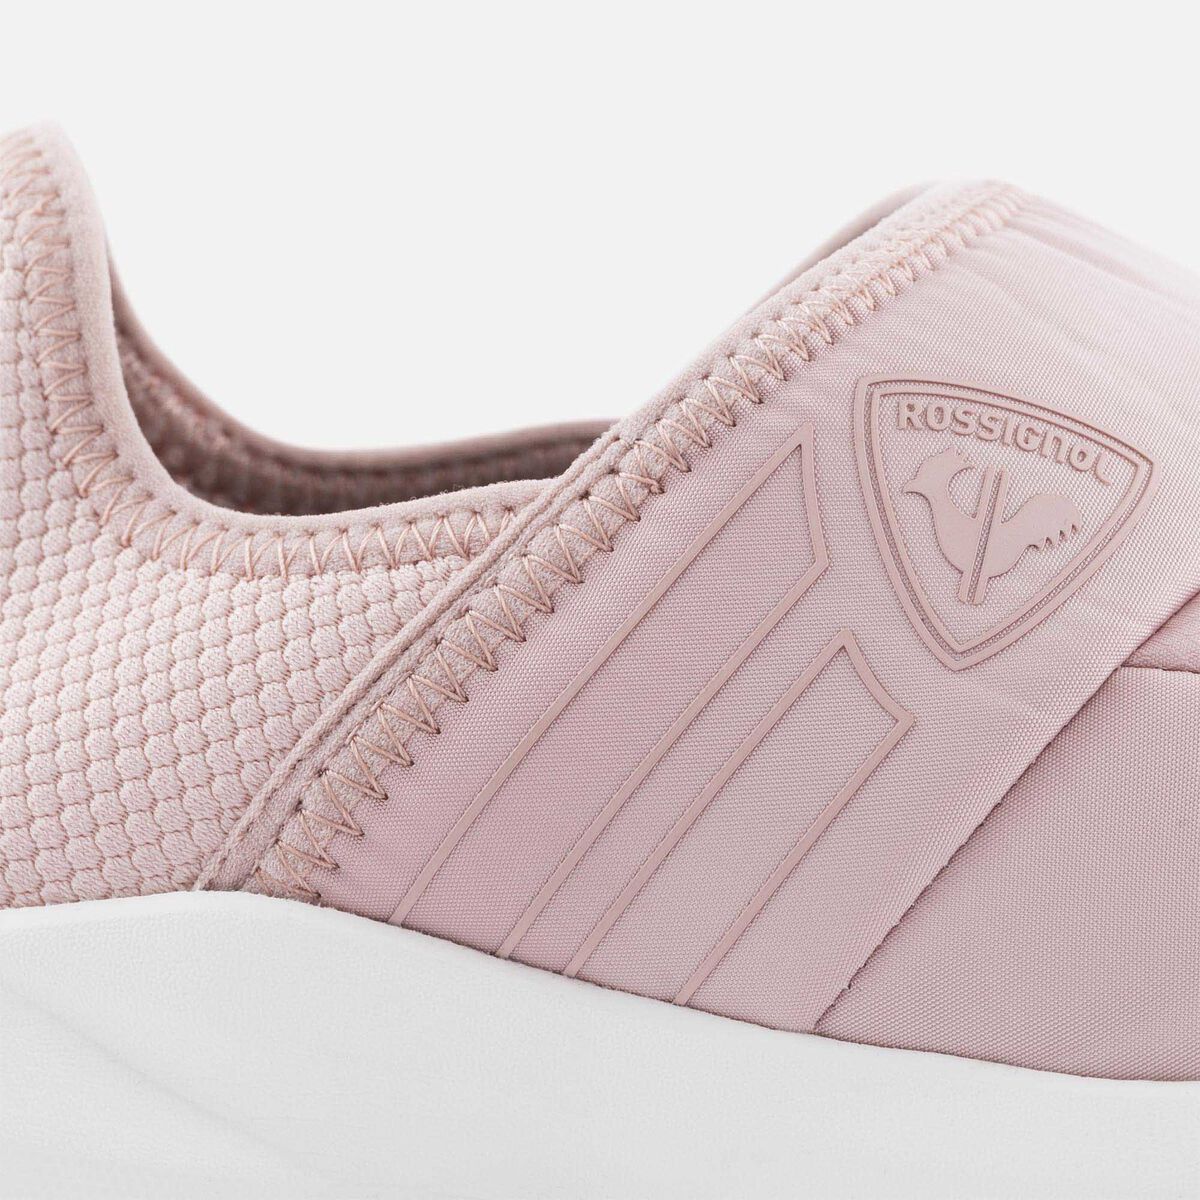 Rossignol Women's Chalet Pink Shoes pinkpurple